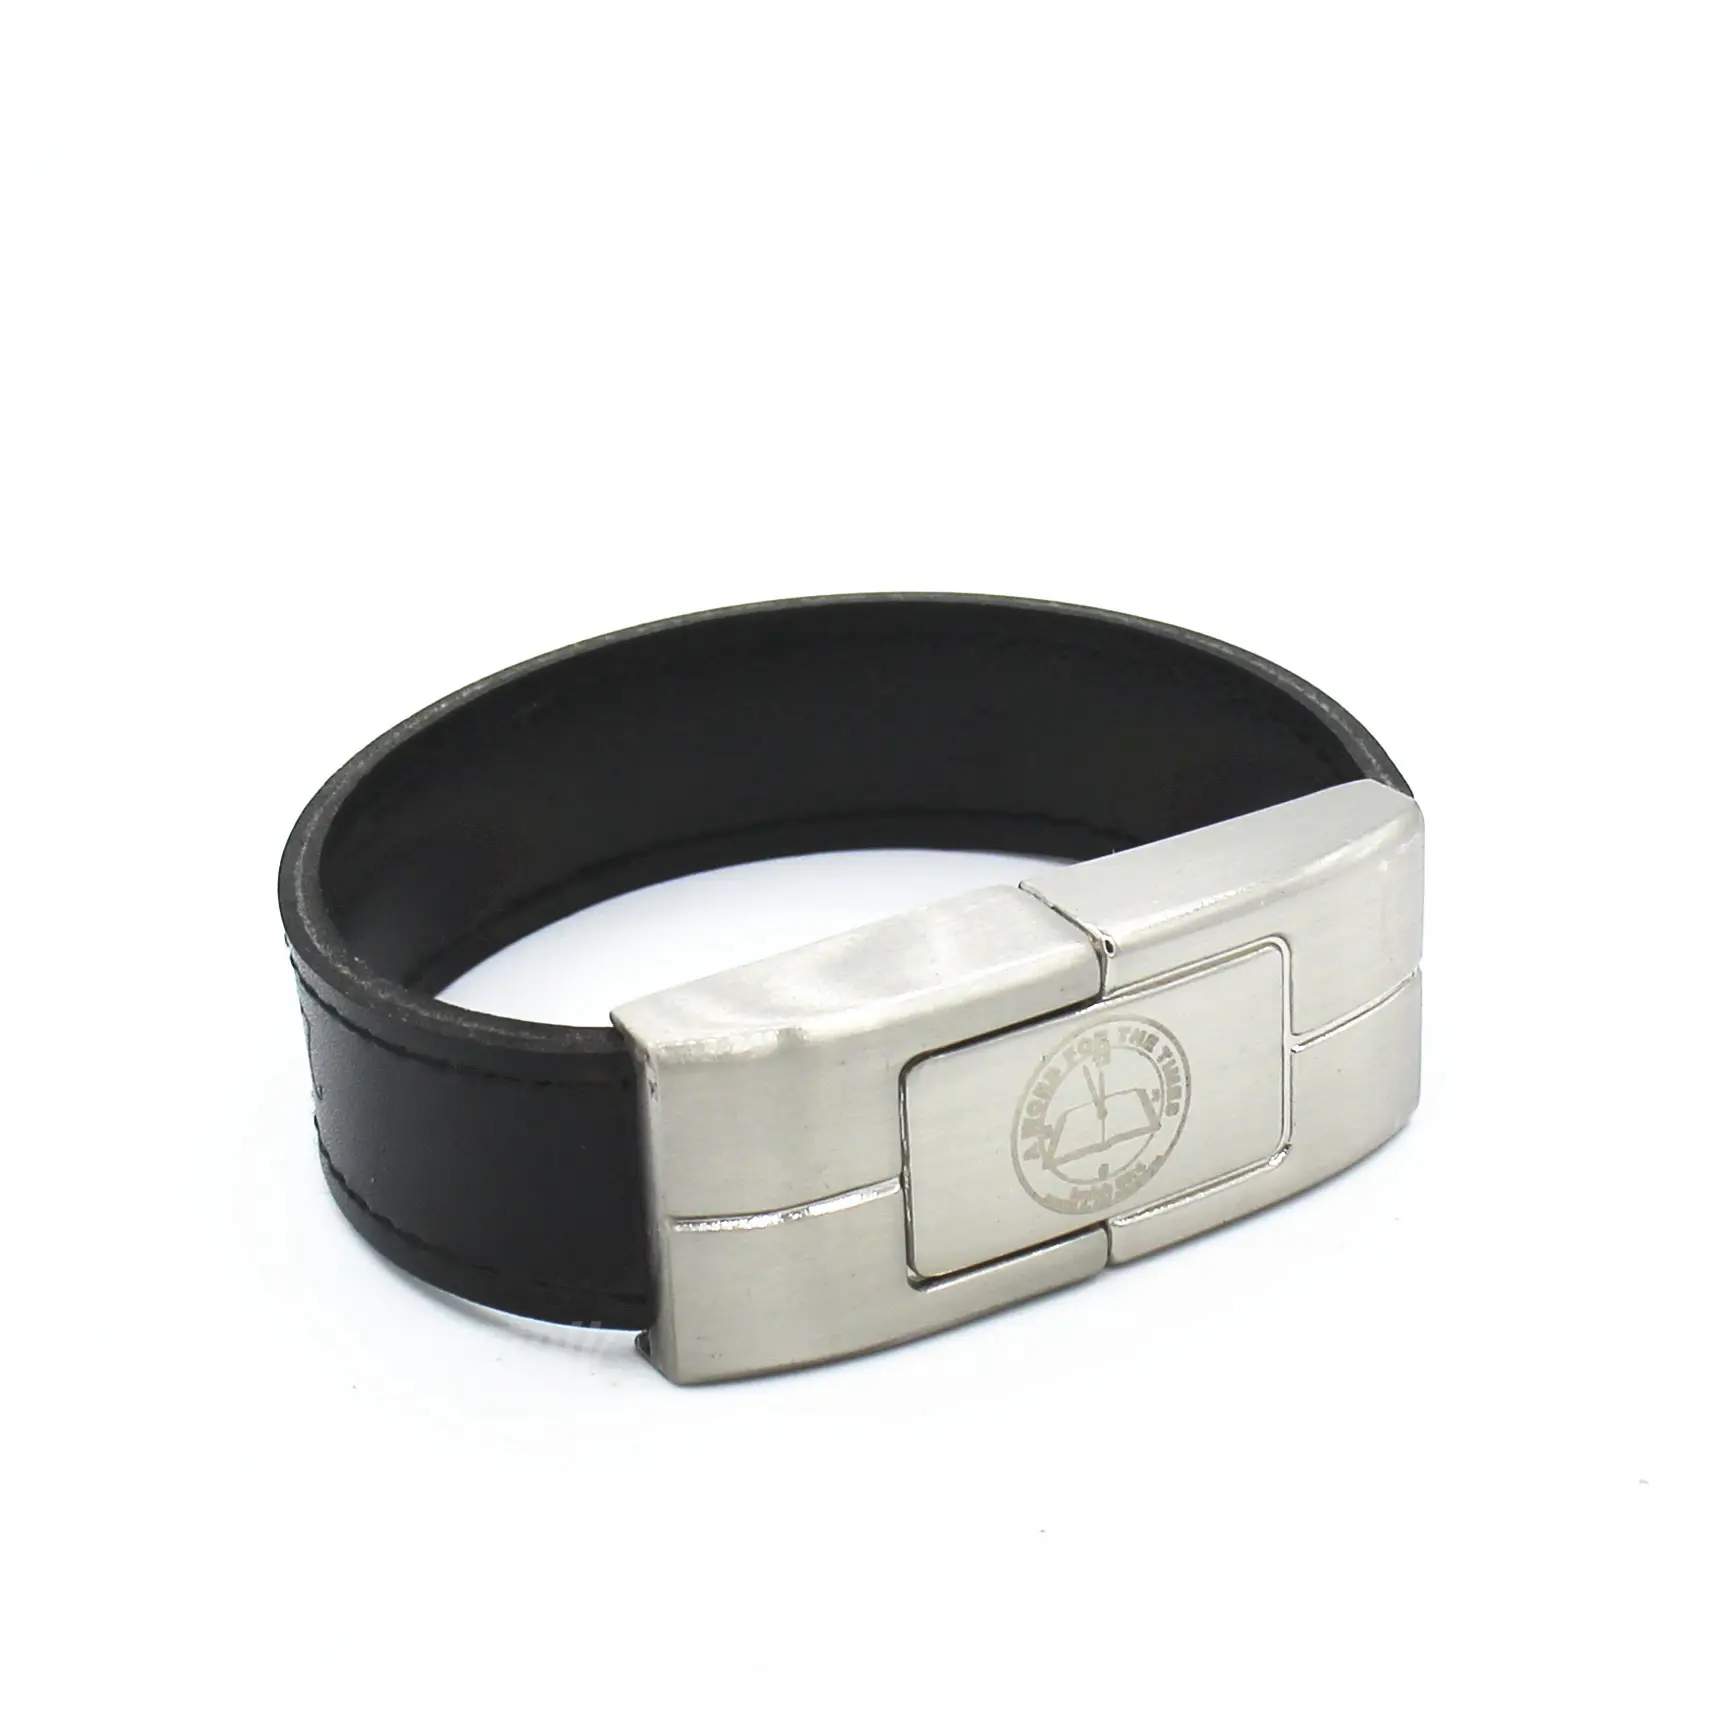 Alibaba Supplier Bracelet Leather Case 64gb Usb Flash Drive 3.0